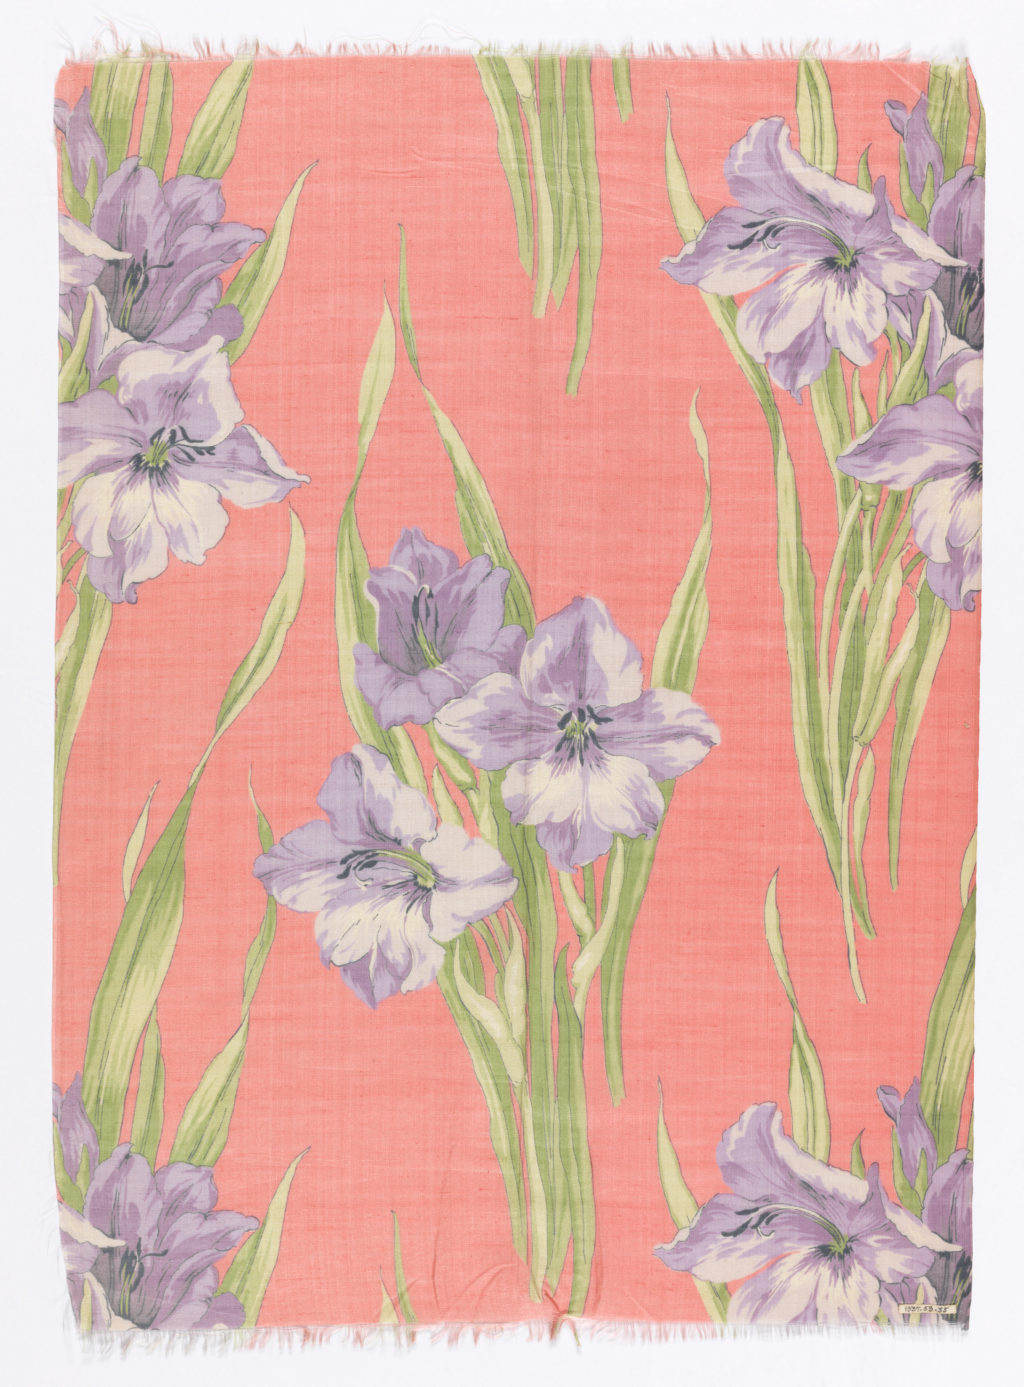 Irises by Sophia Crownfield - Early 20th century Cooper Hewitt Museum